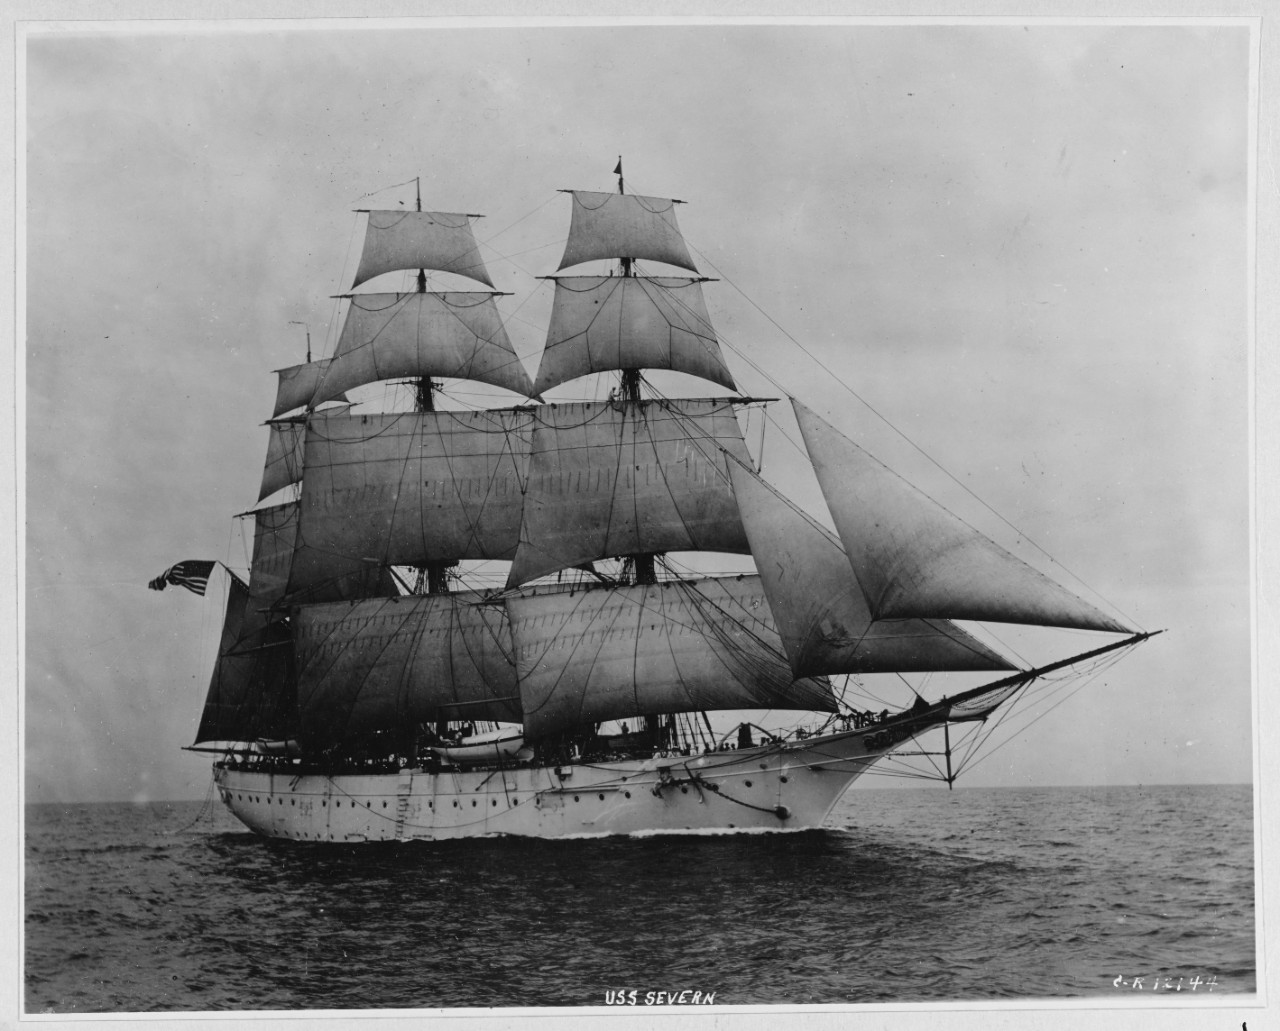 USS SEVERN (1899-1916)